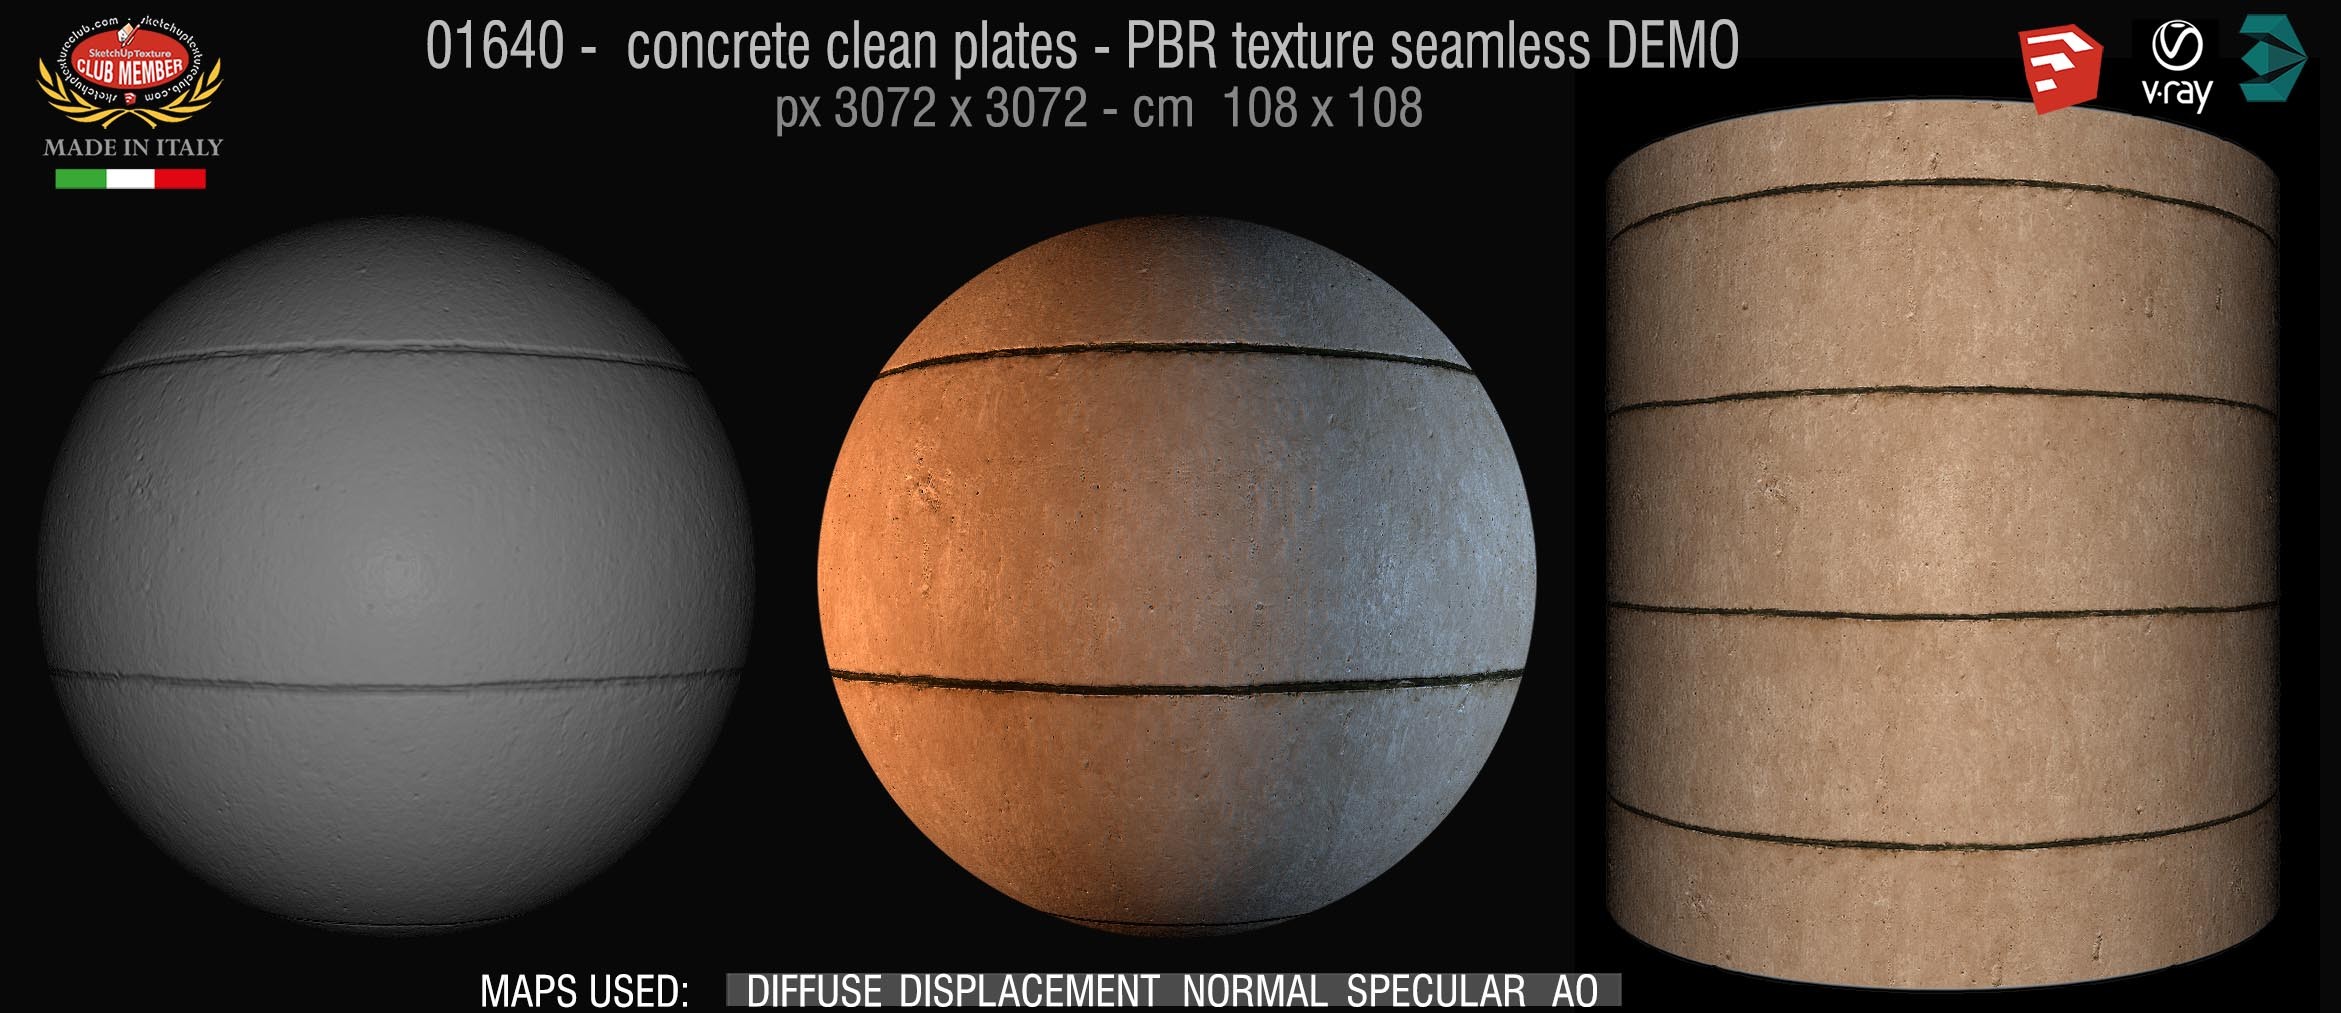 01640 concrete clean plates wall PBR texture seamless DEMO